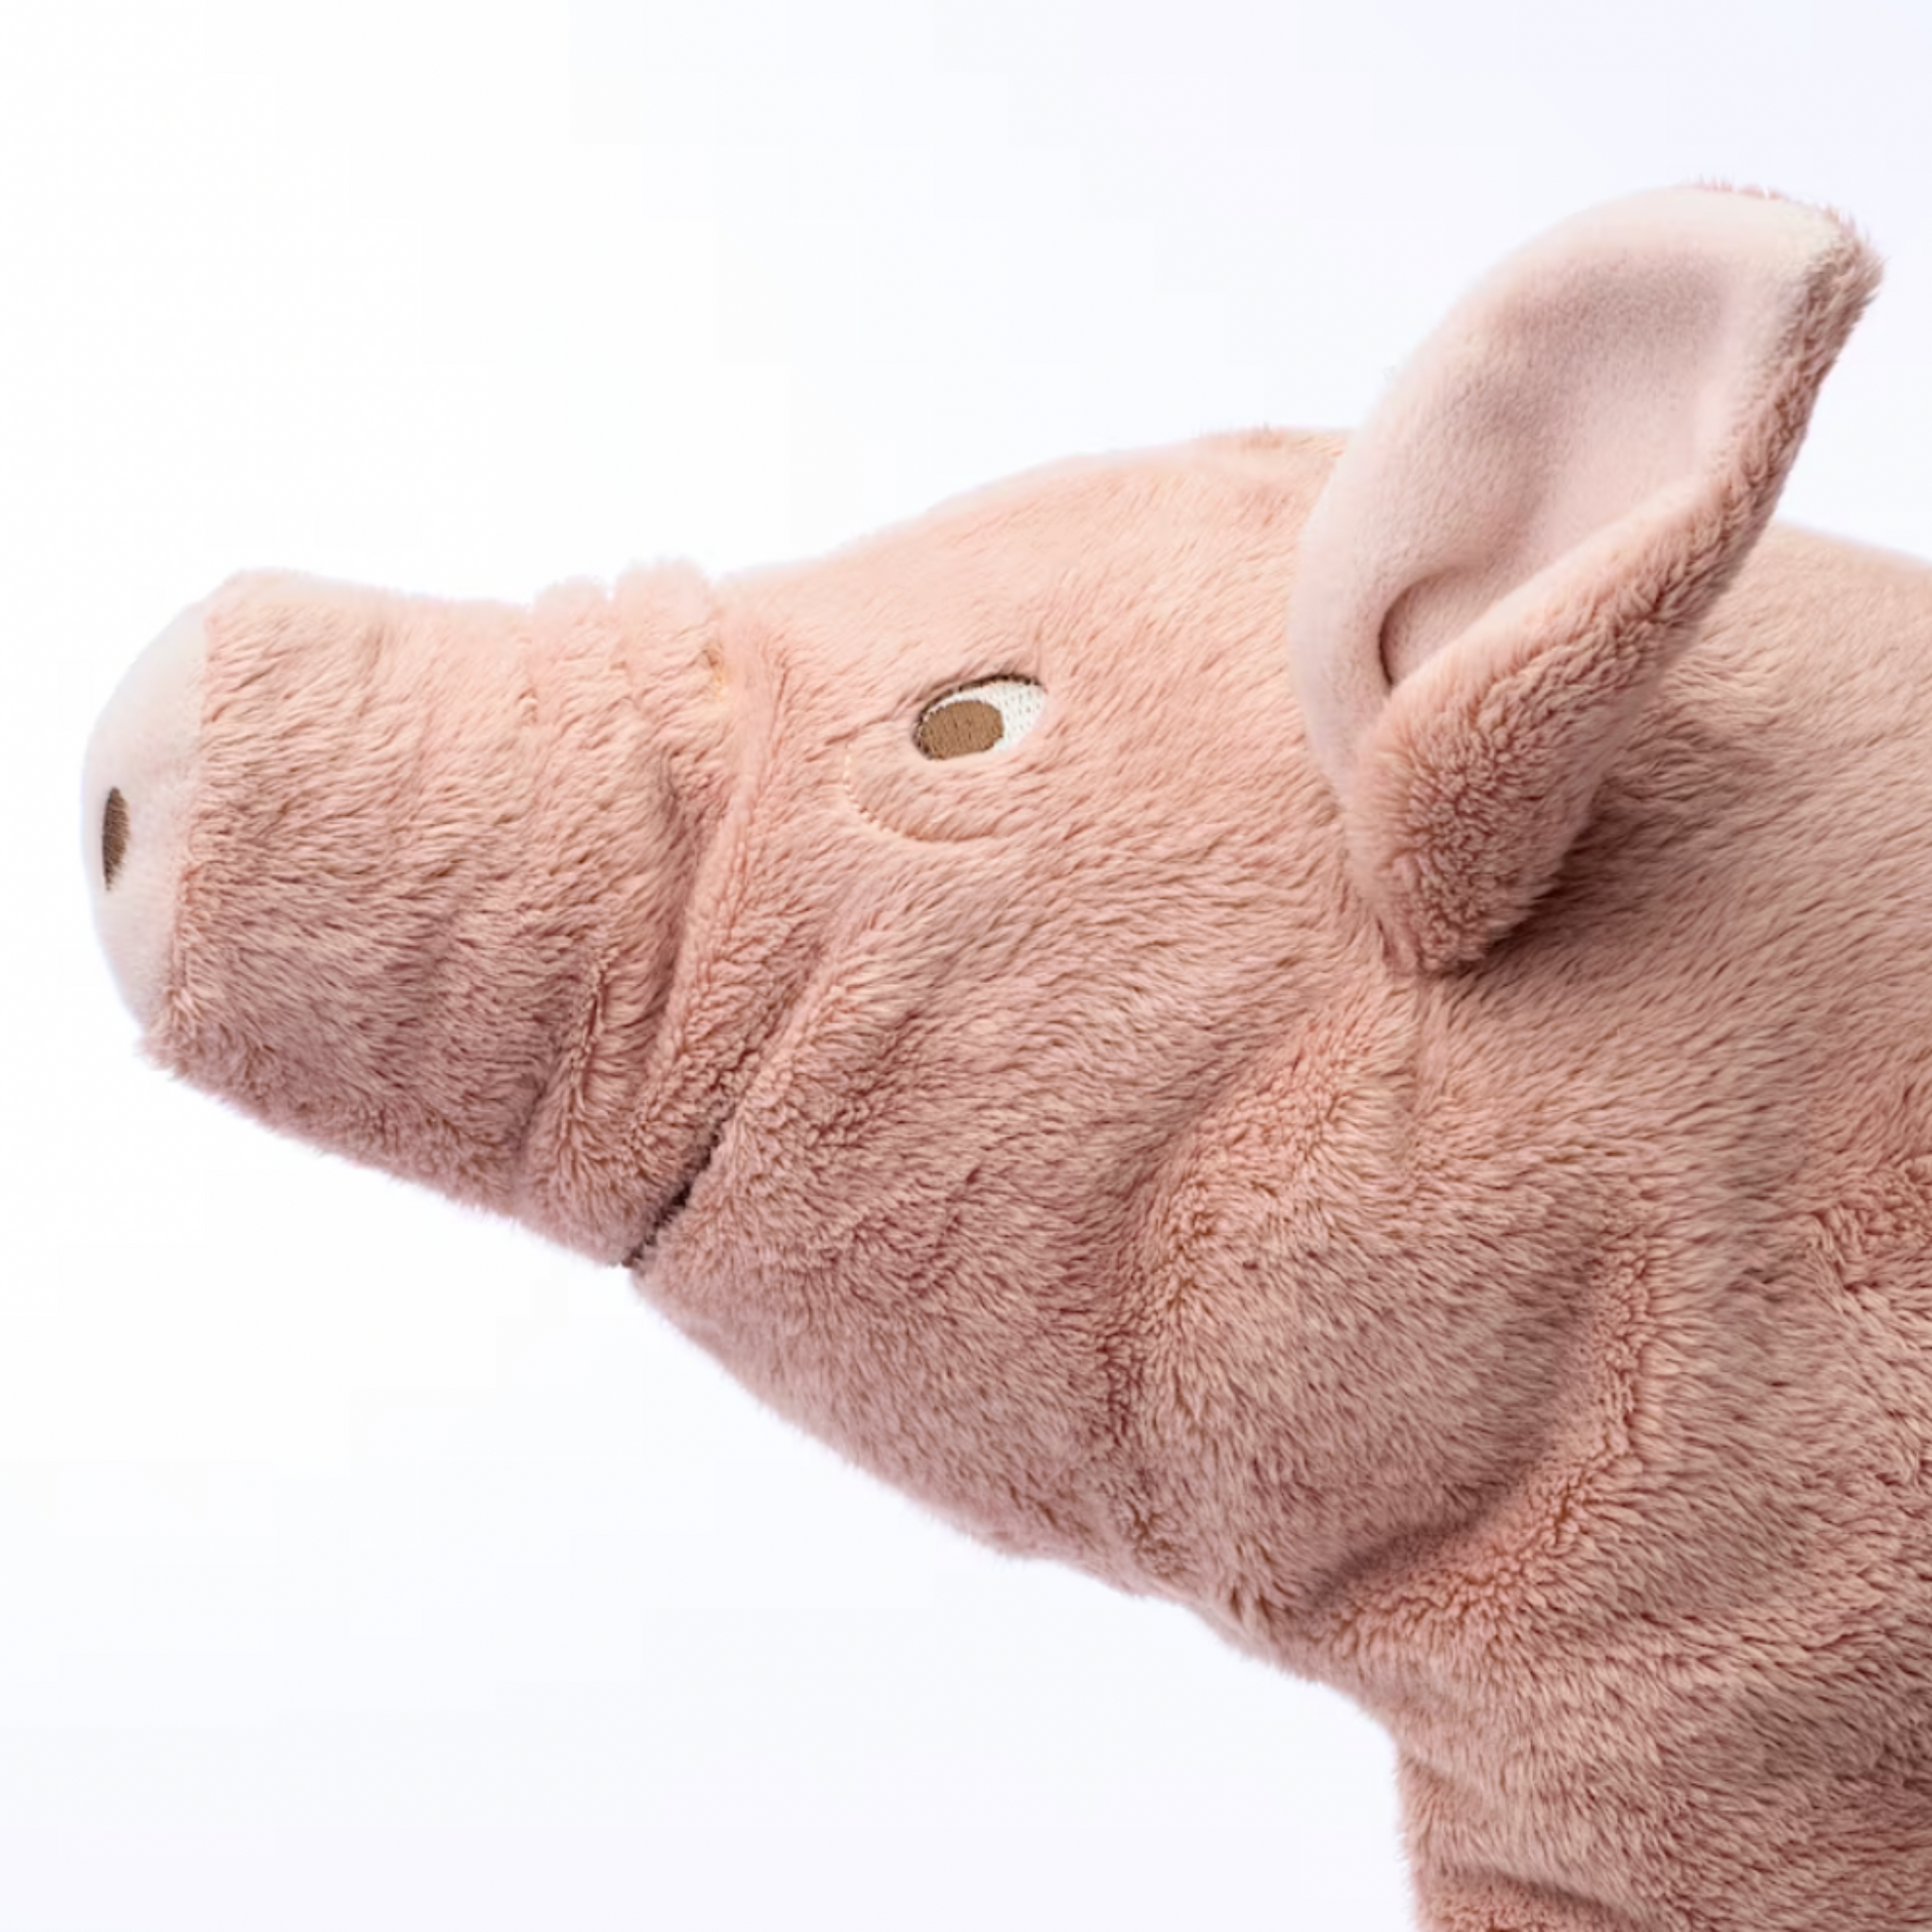 IKEA Knorrig Pig Soft Toy (3955347030081)